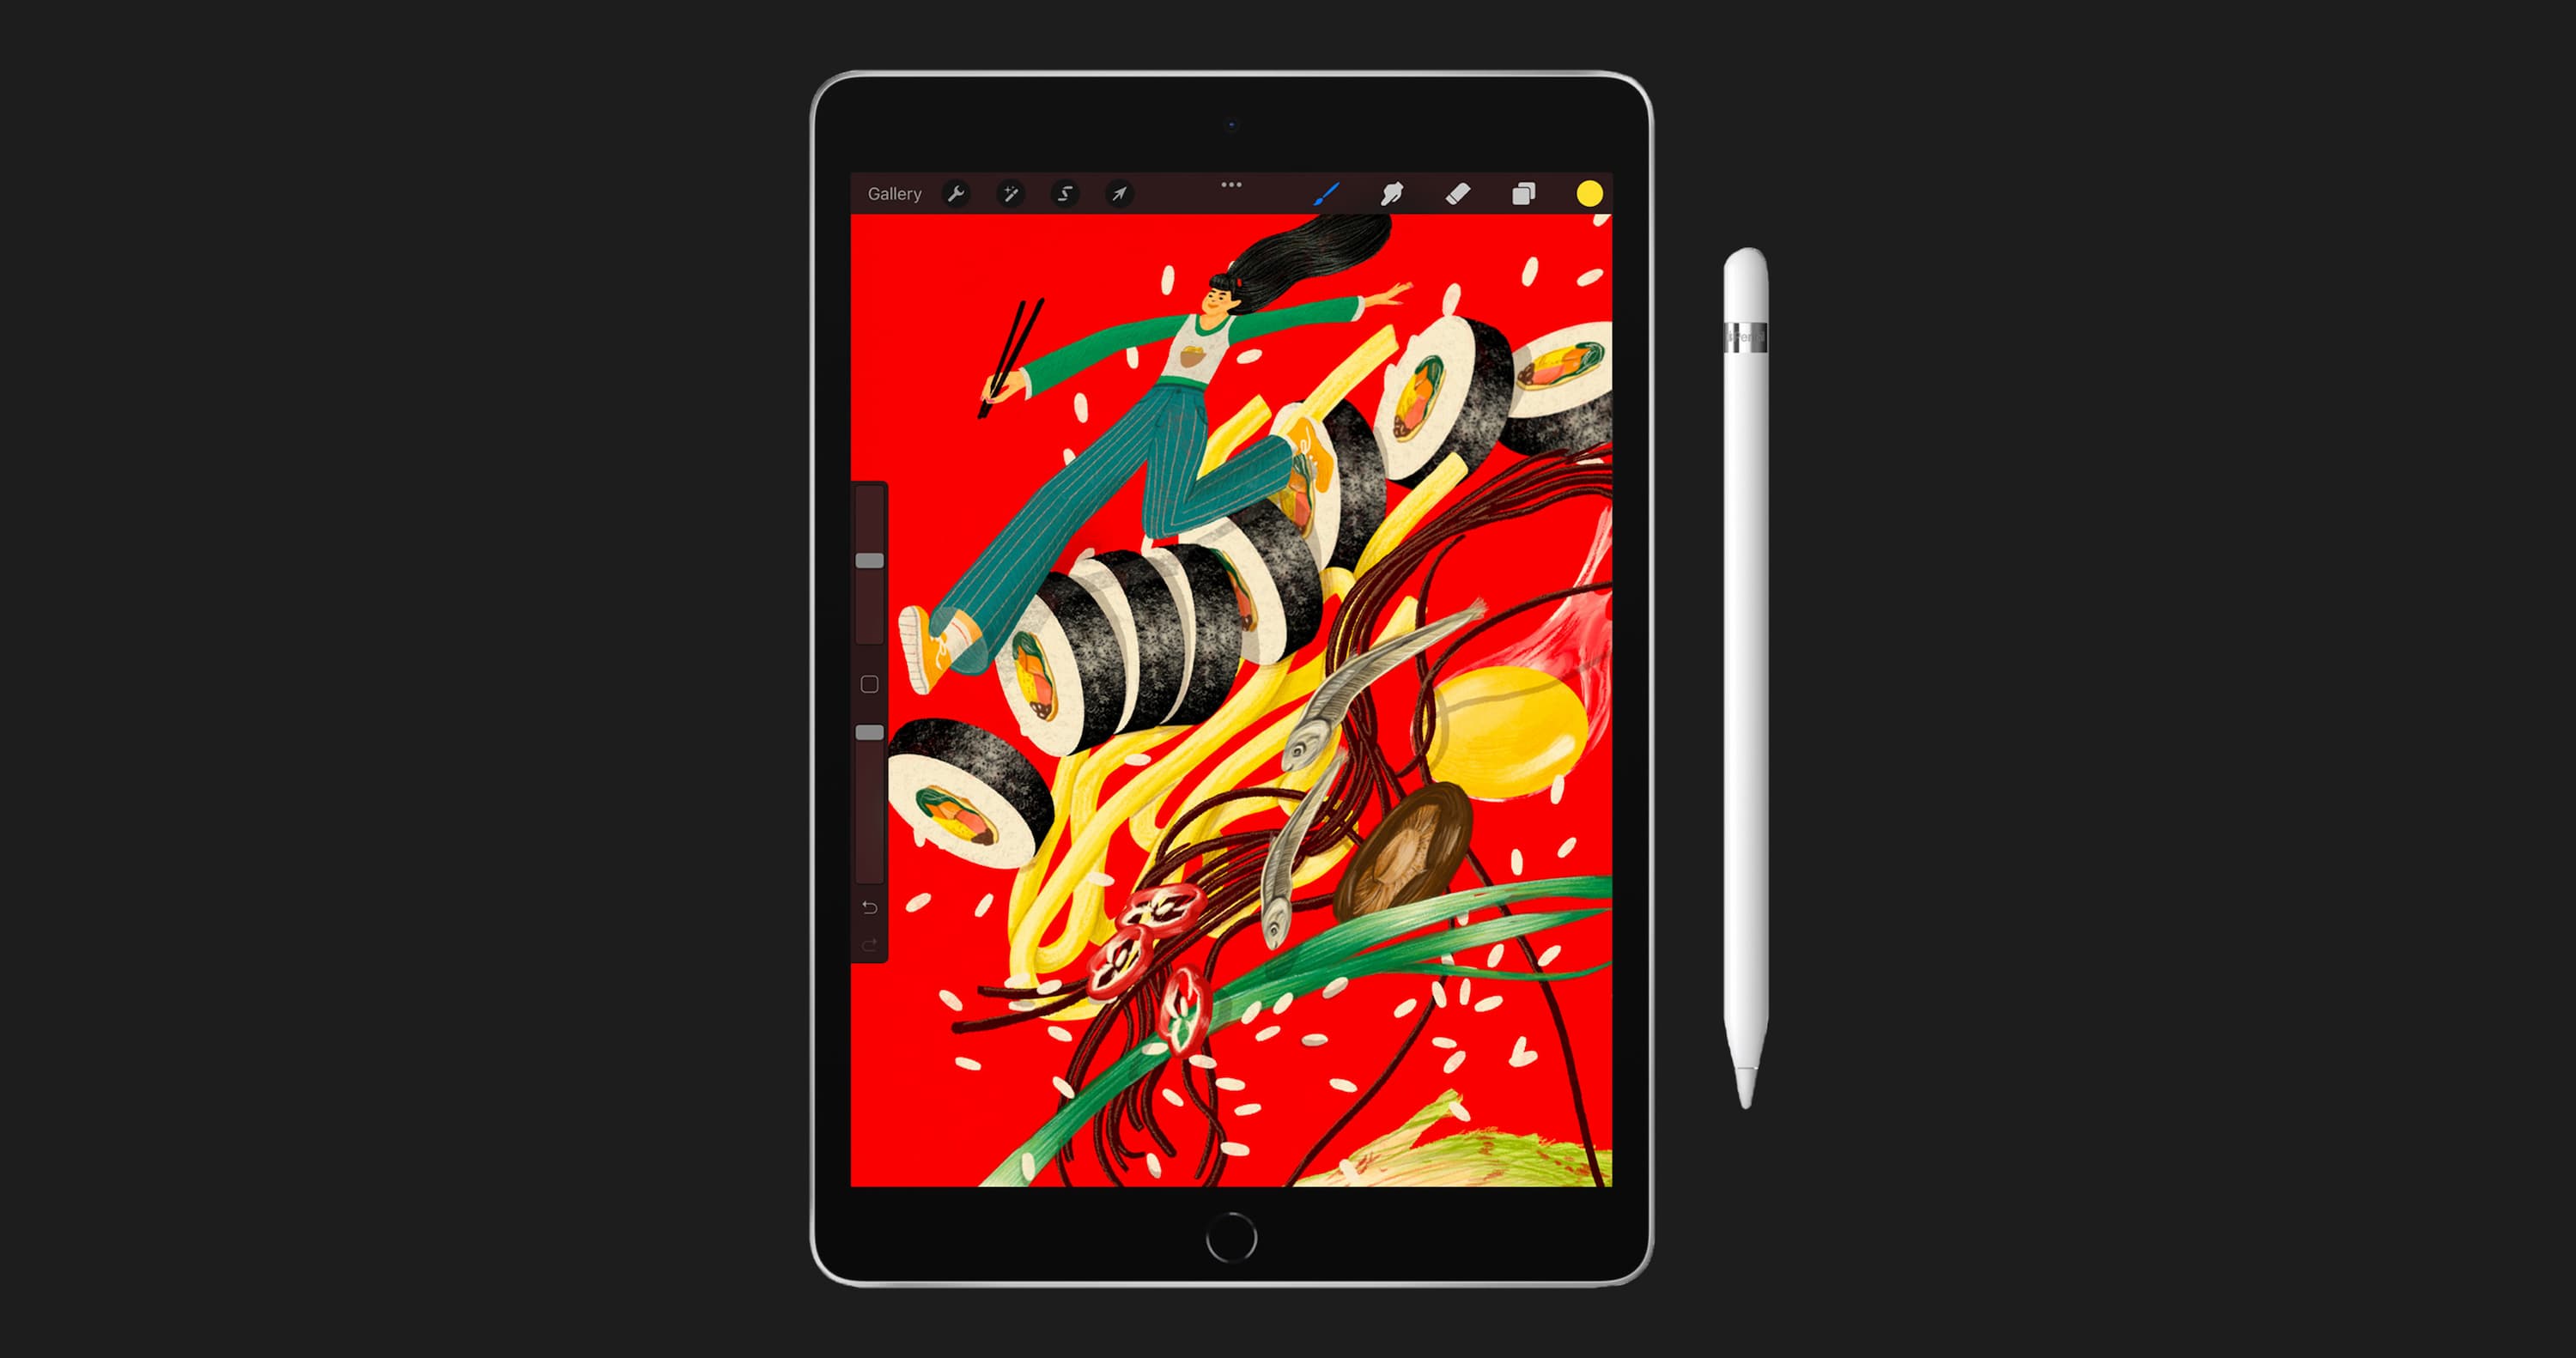 Планшет Apple iPad 10.2 128GB Gold (MYLF2) 2020